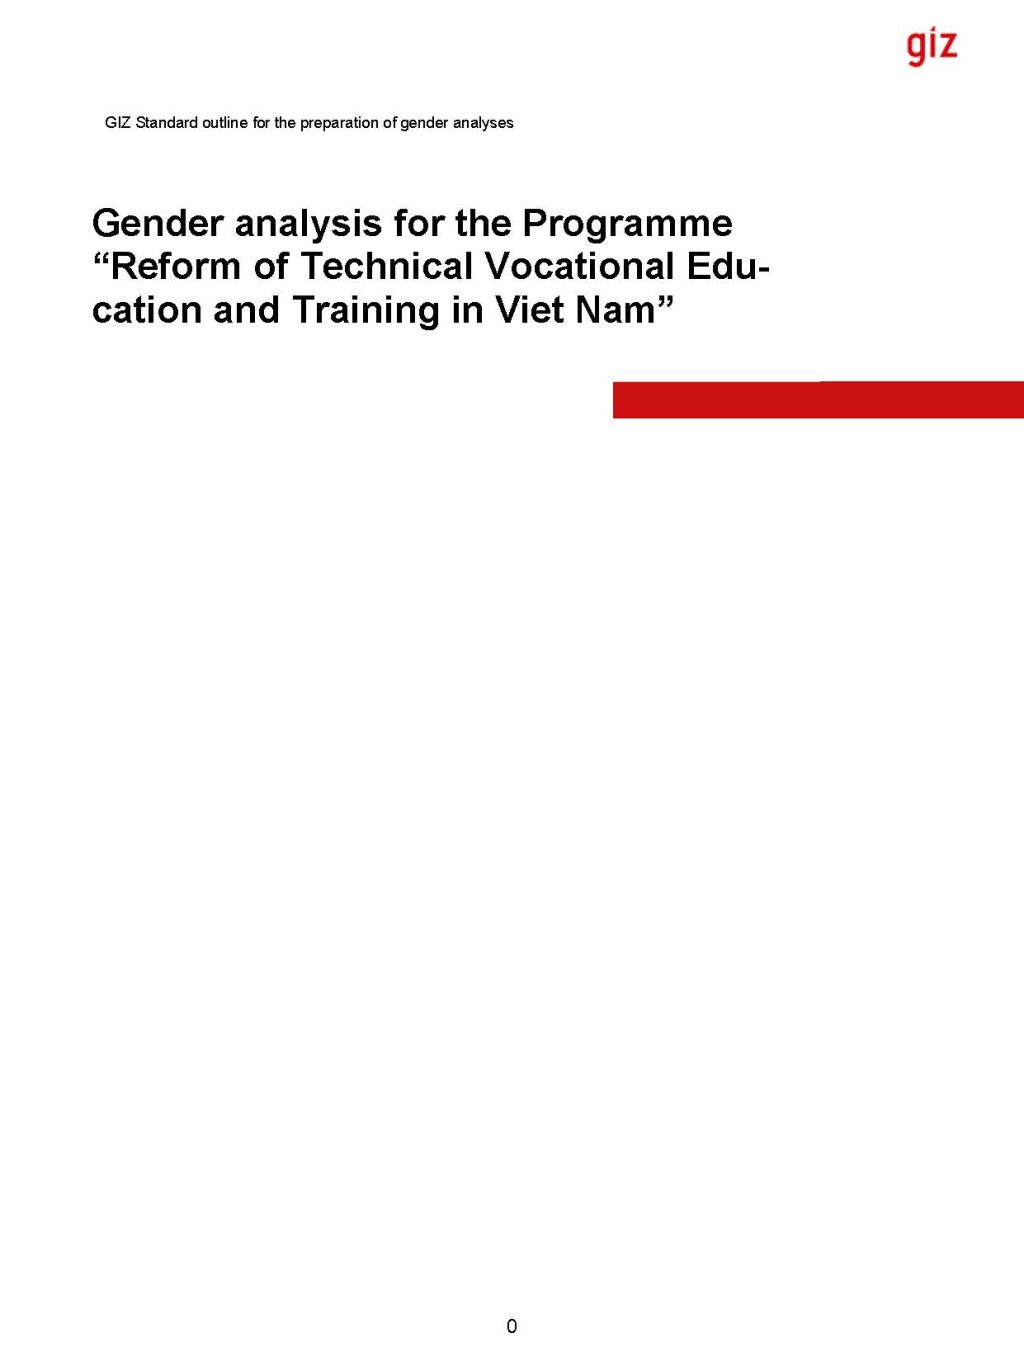 Pages from 20191018 LMP CK NHN Gender Analysis for TVET Programme EN